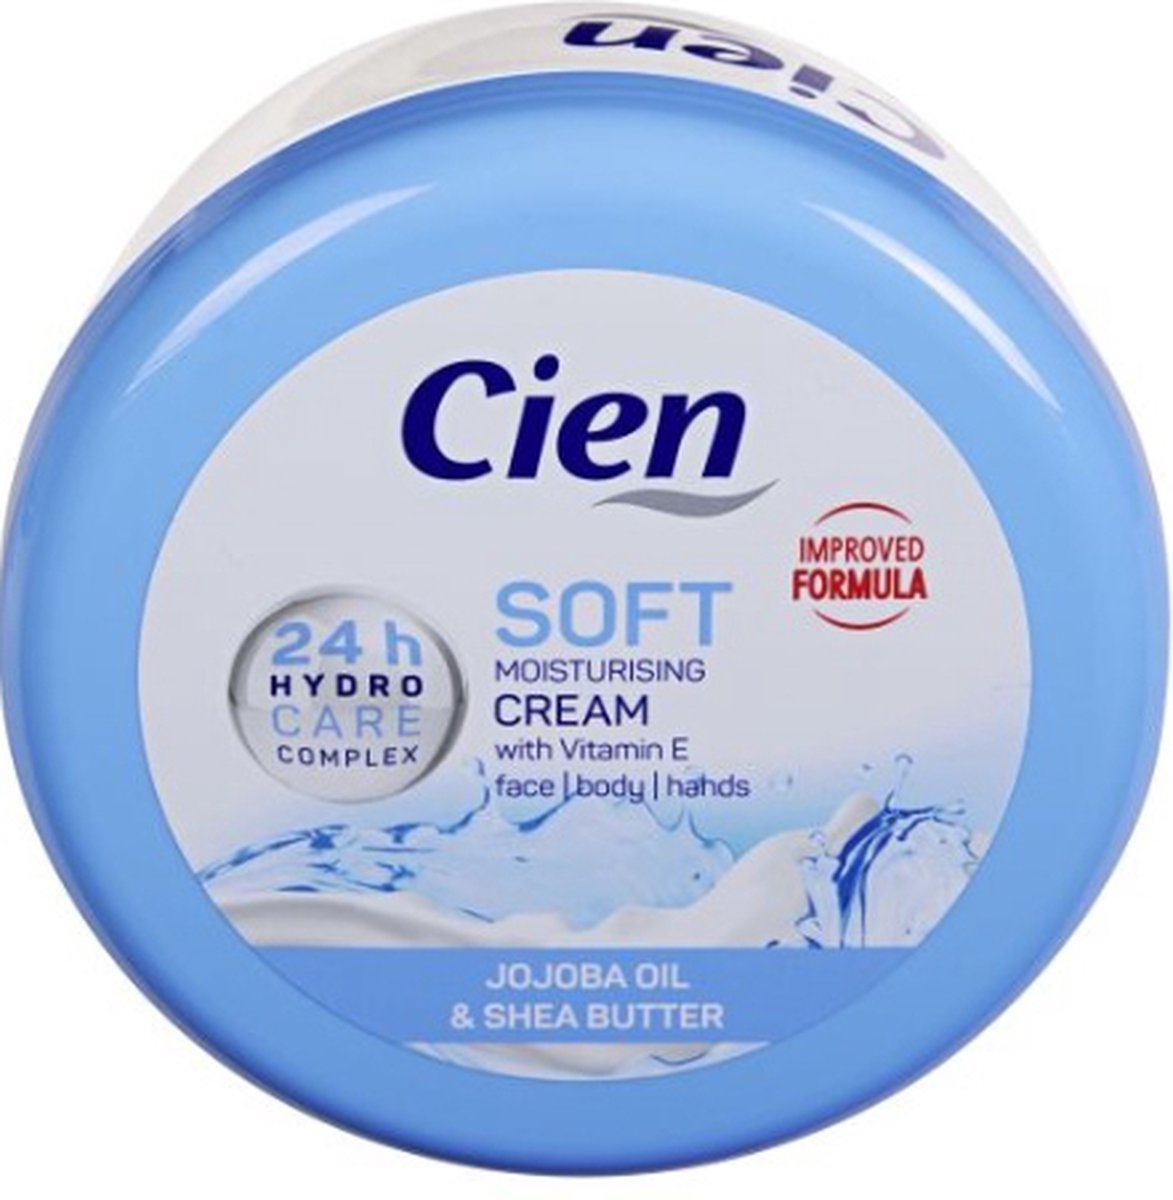 Cien Soft Moisturising Cream | Jojoba Oil & Shea Butter | Vitamine E | Face & Body | 250ml